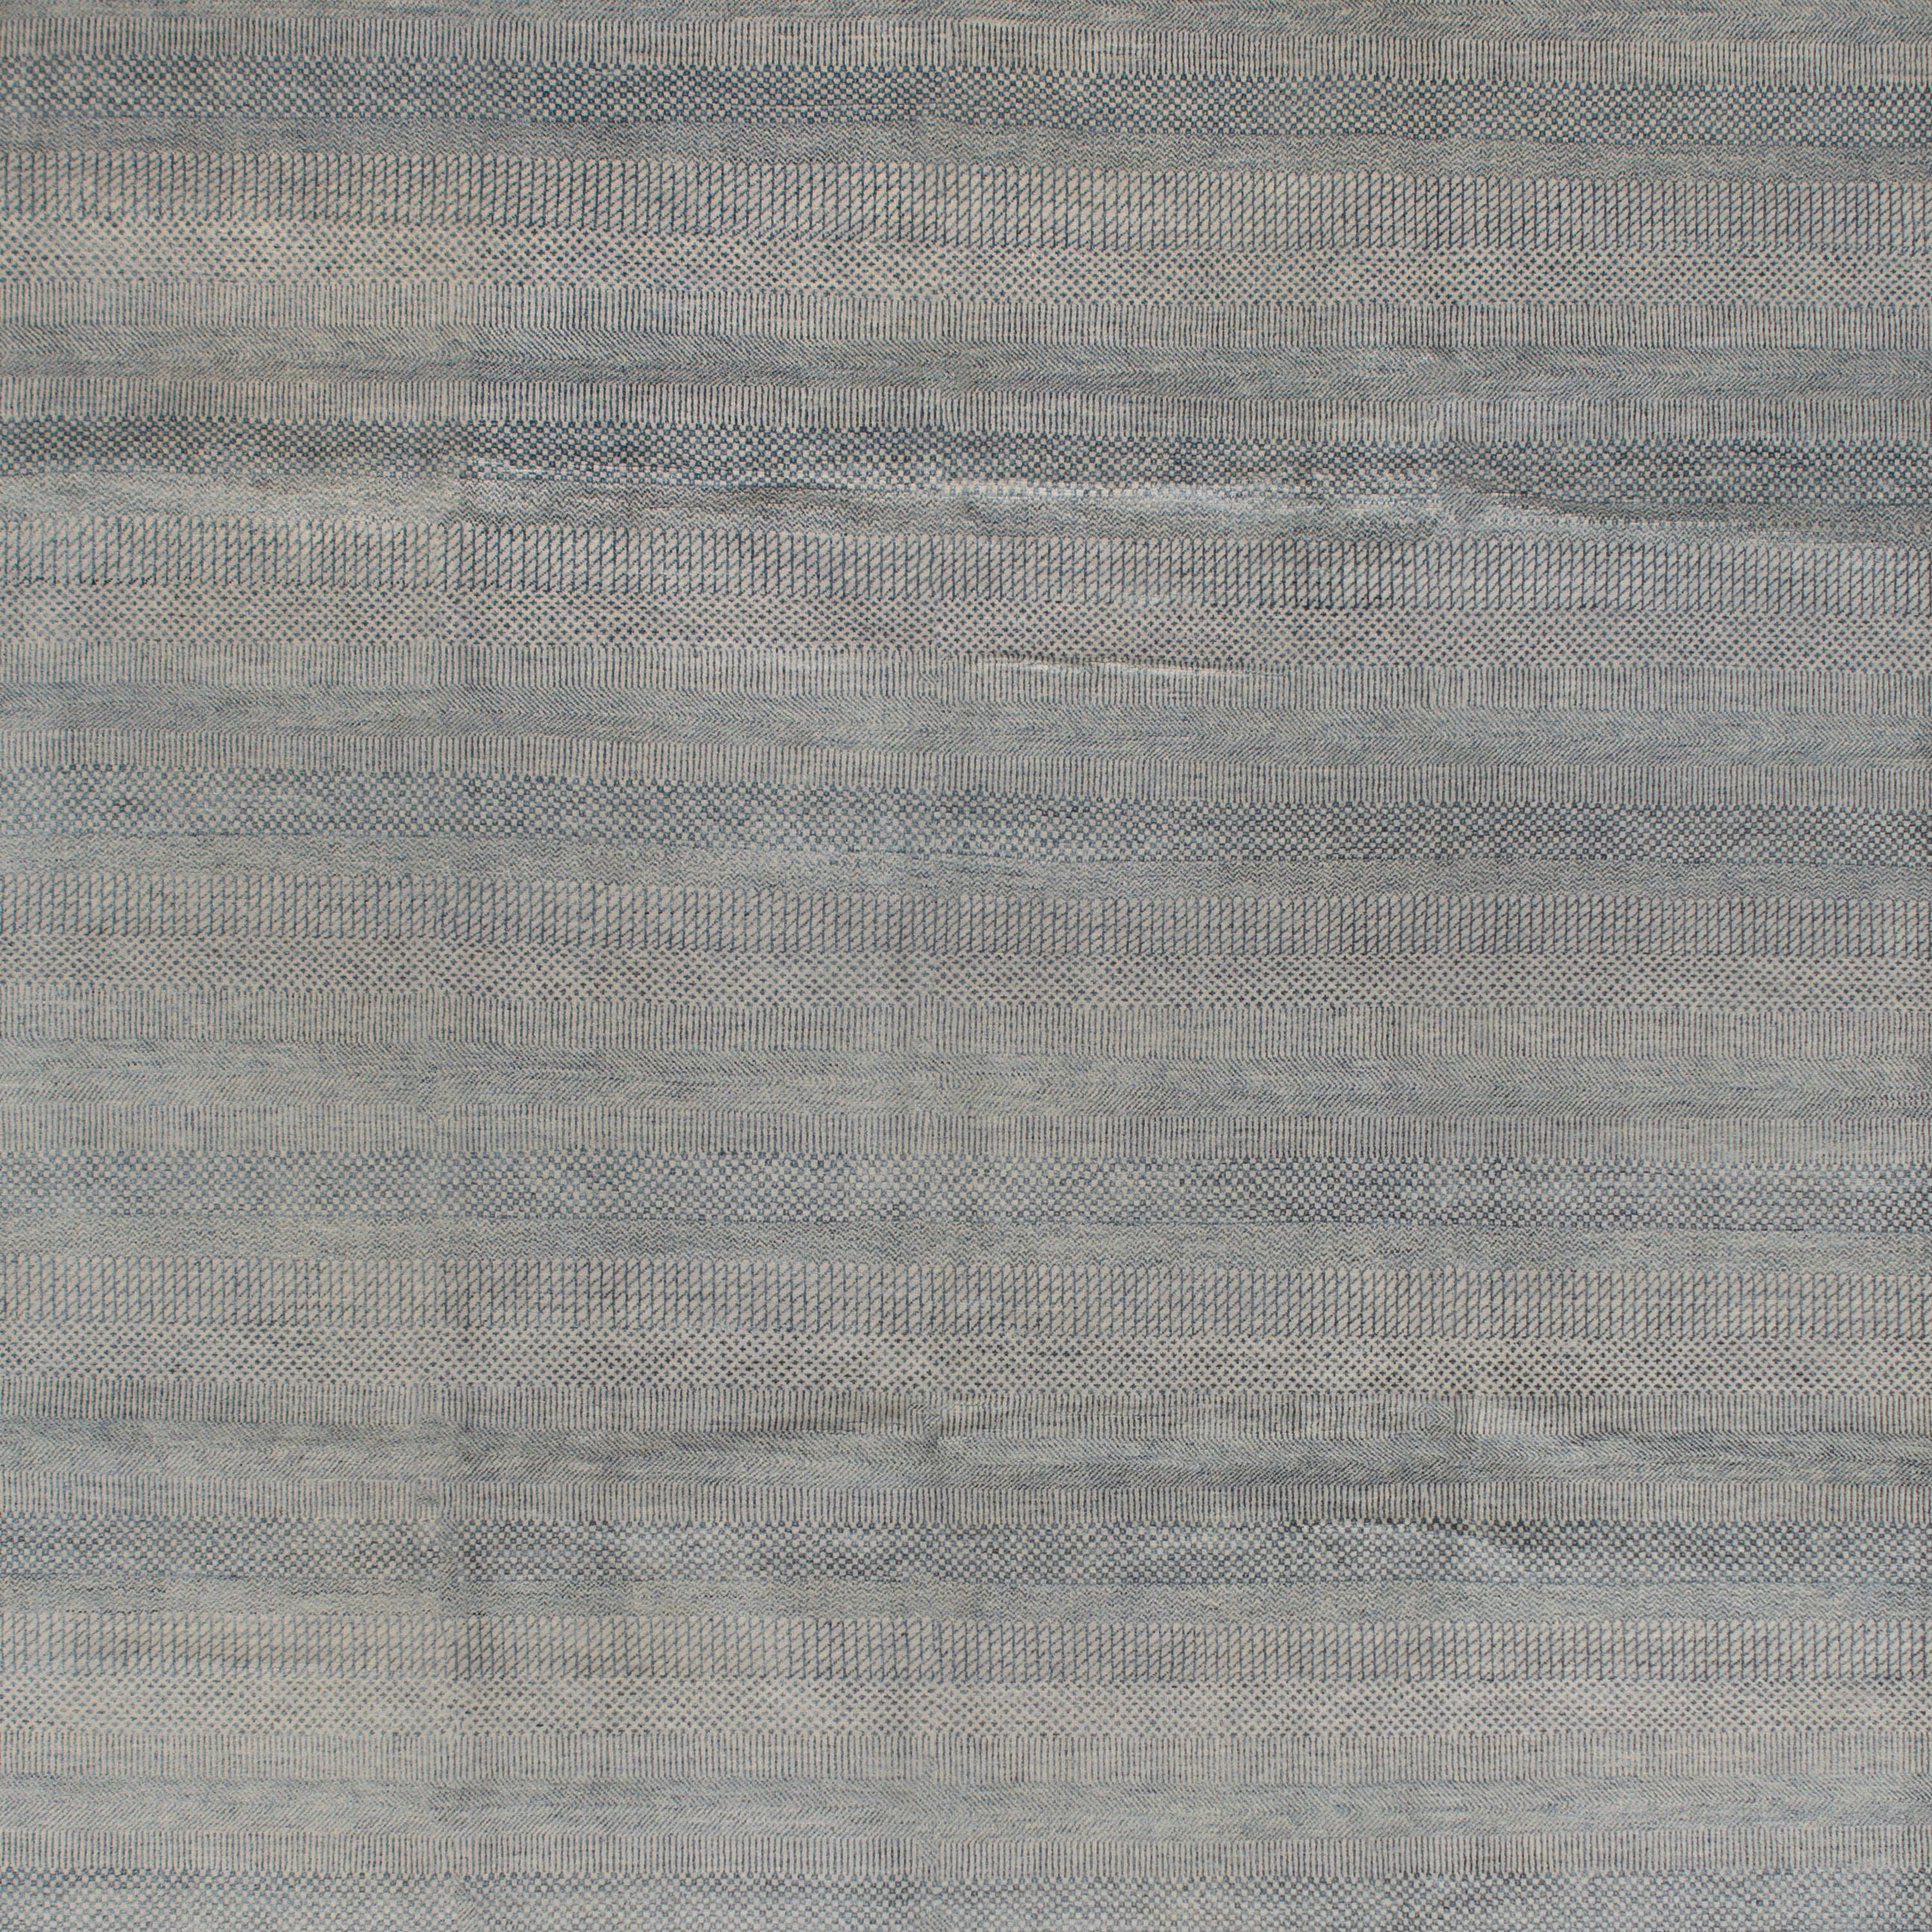 Grey Modern Wool Blend Rug - 9'1" x 12'4"